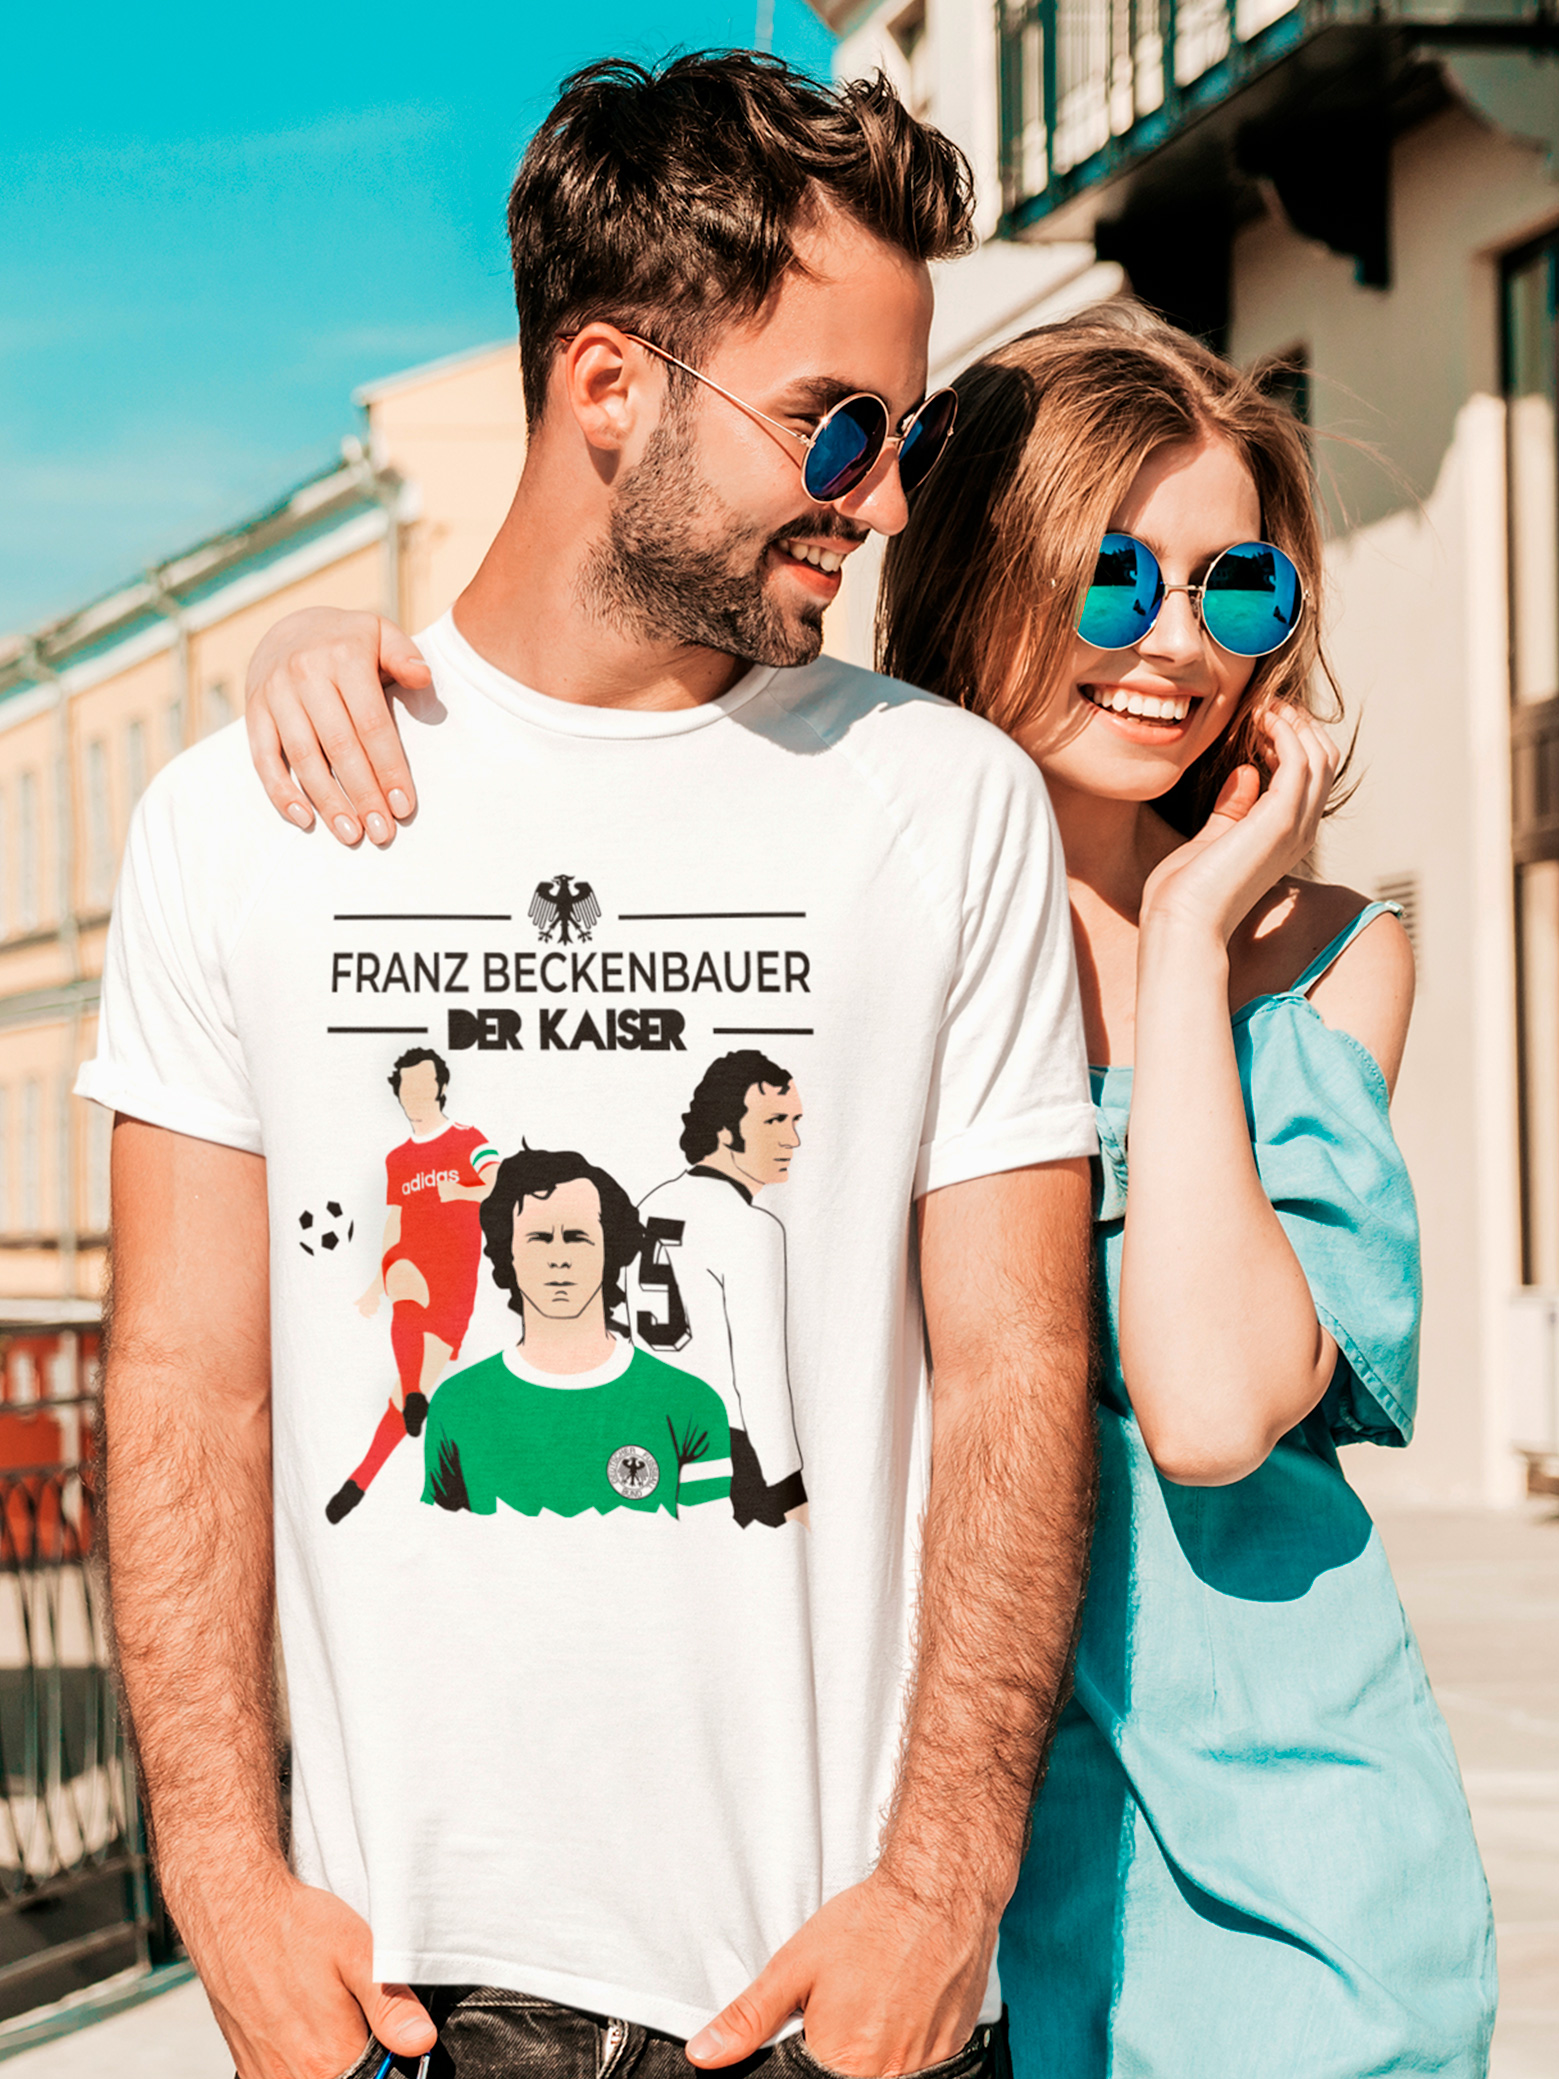 Der Kaiser - Franz Beckenbauer